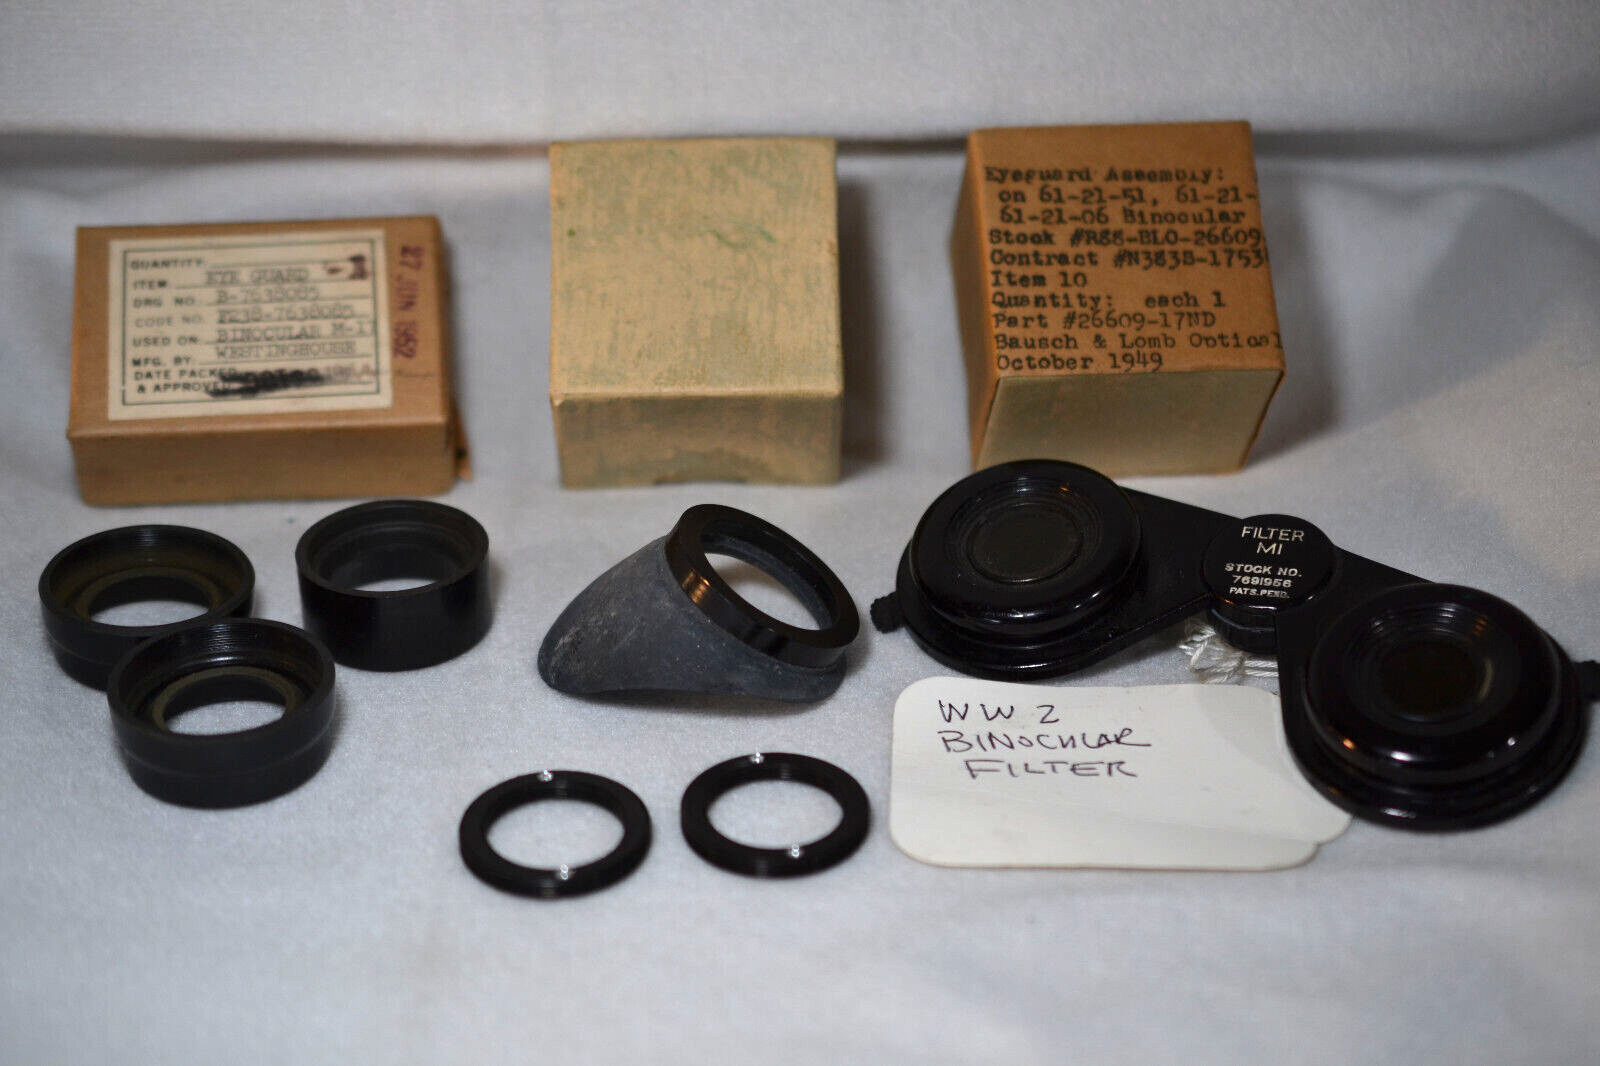 Vintage WWII Military Binocular Parts